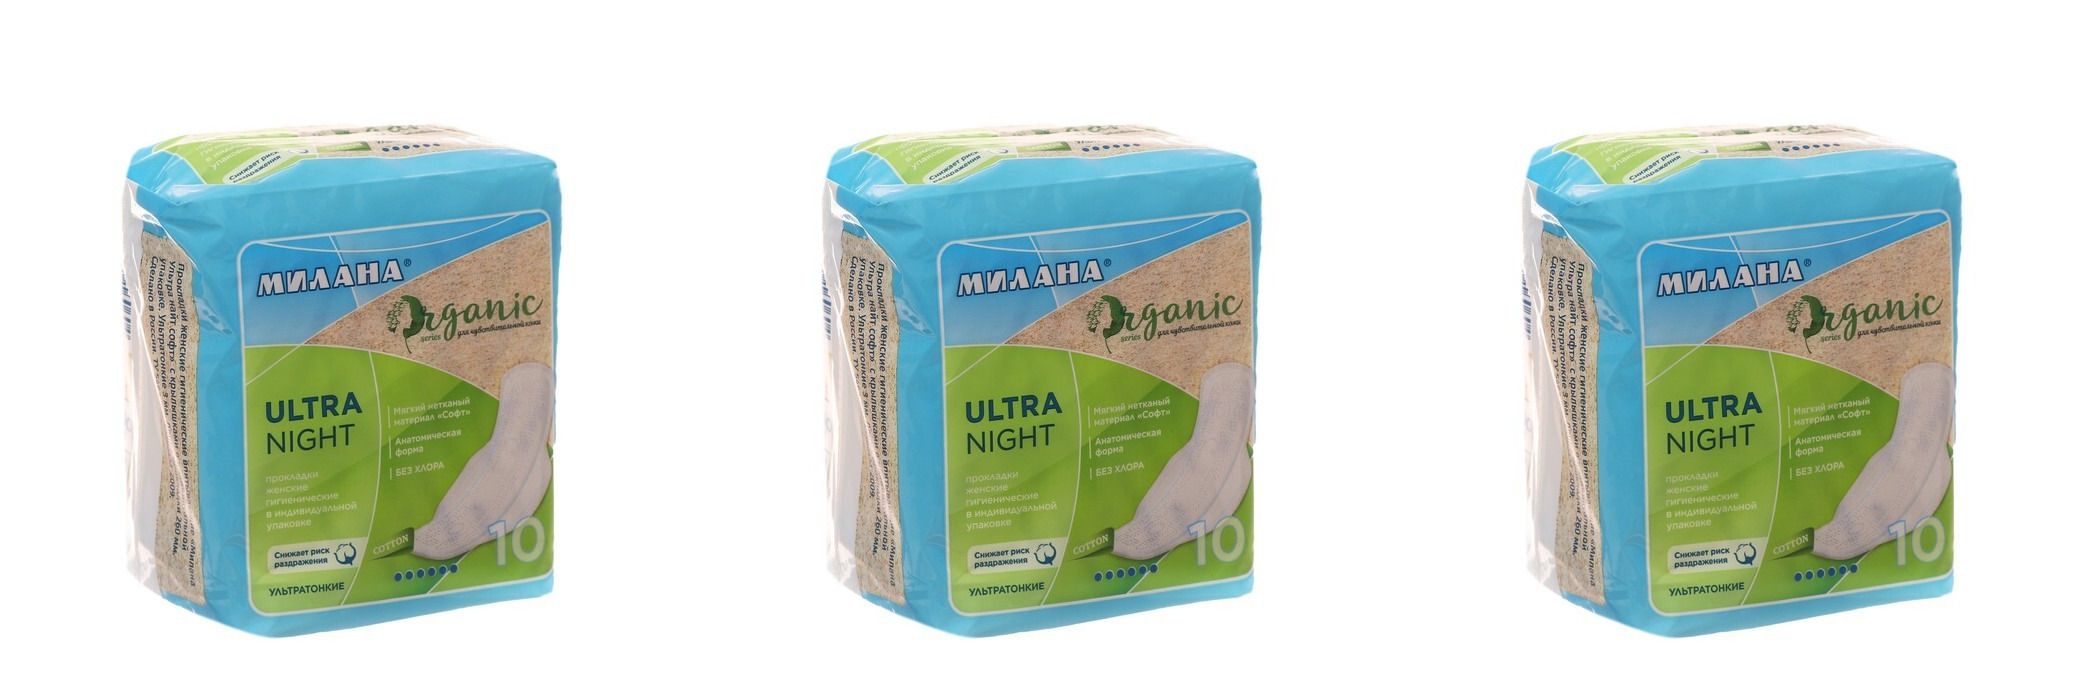 Прокладки Милана Ultra Night Organic, 10шт, 3 уп